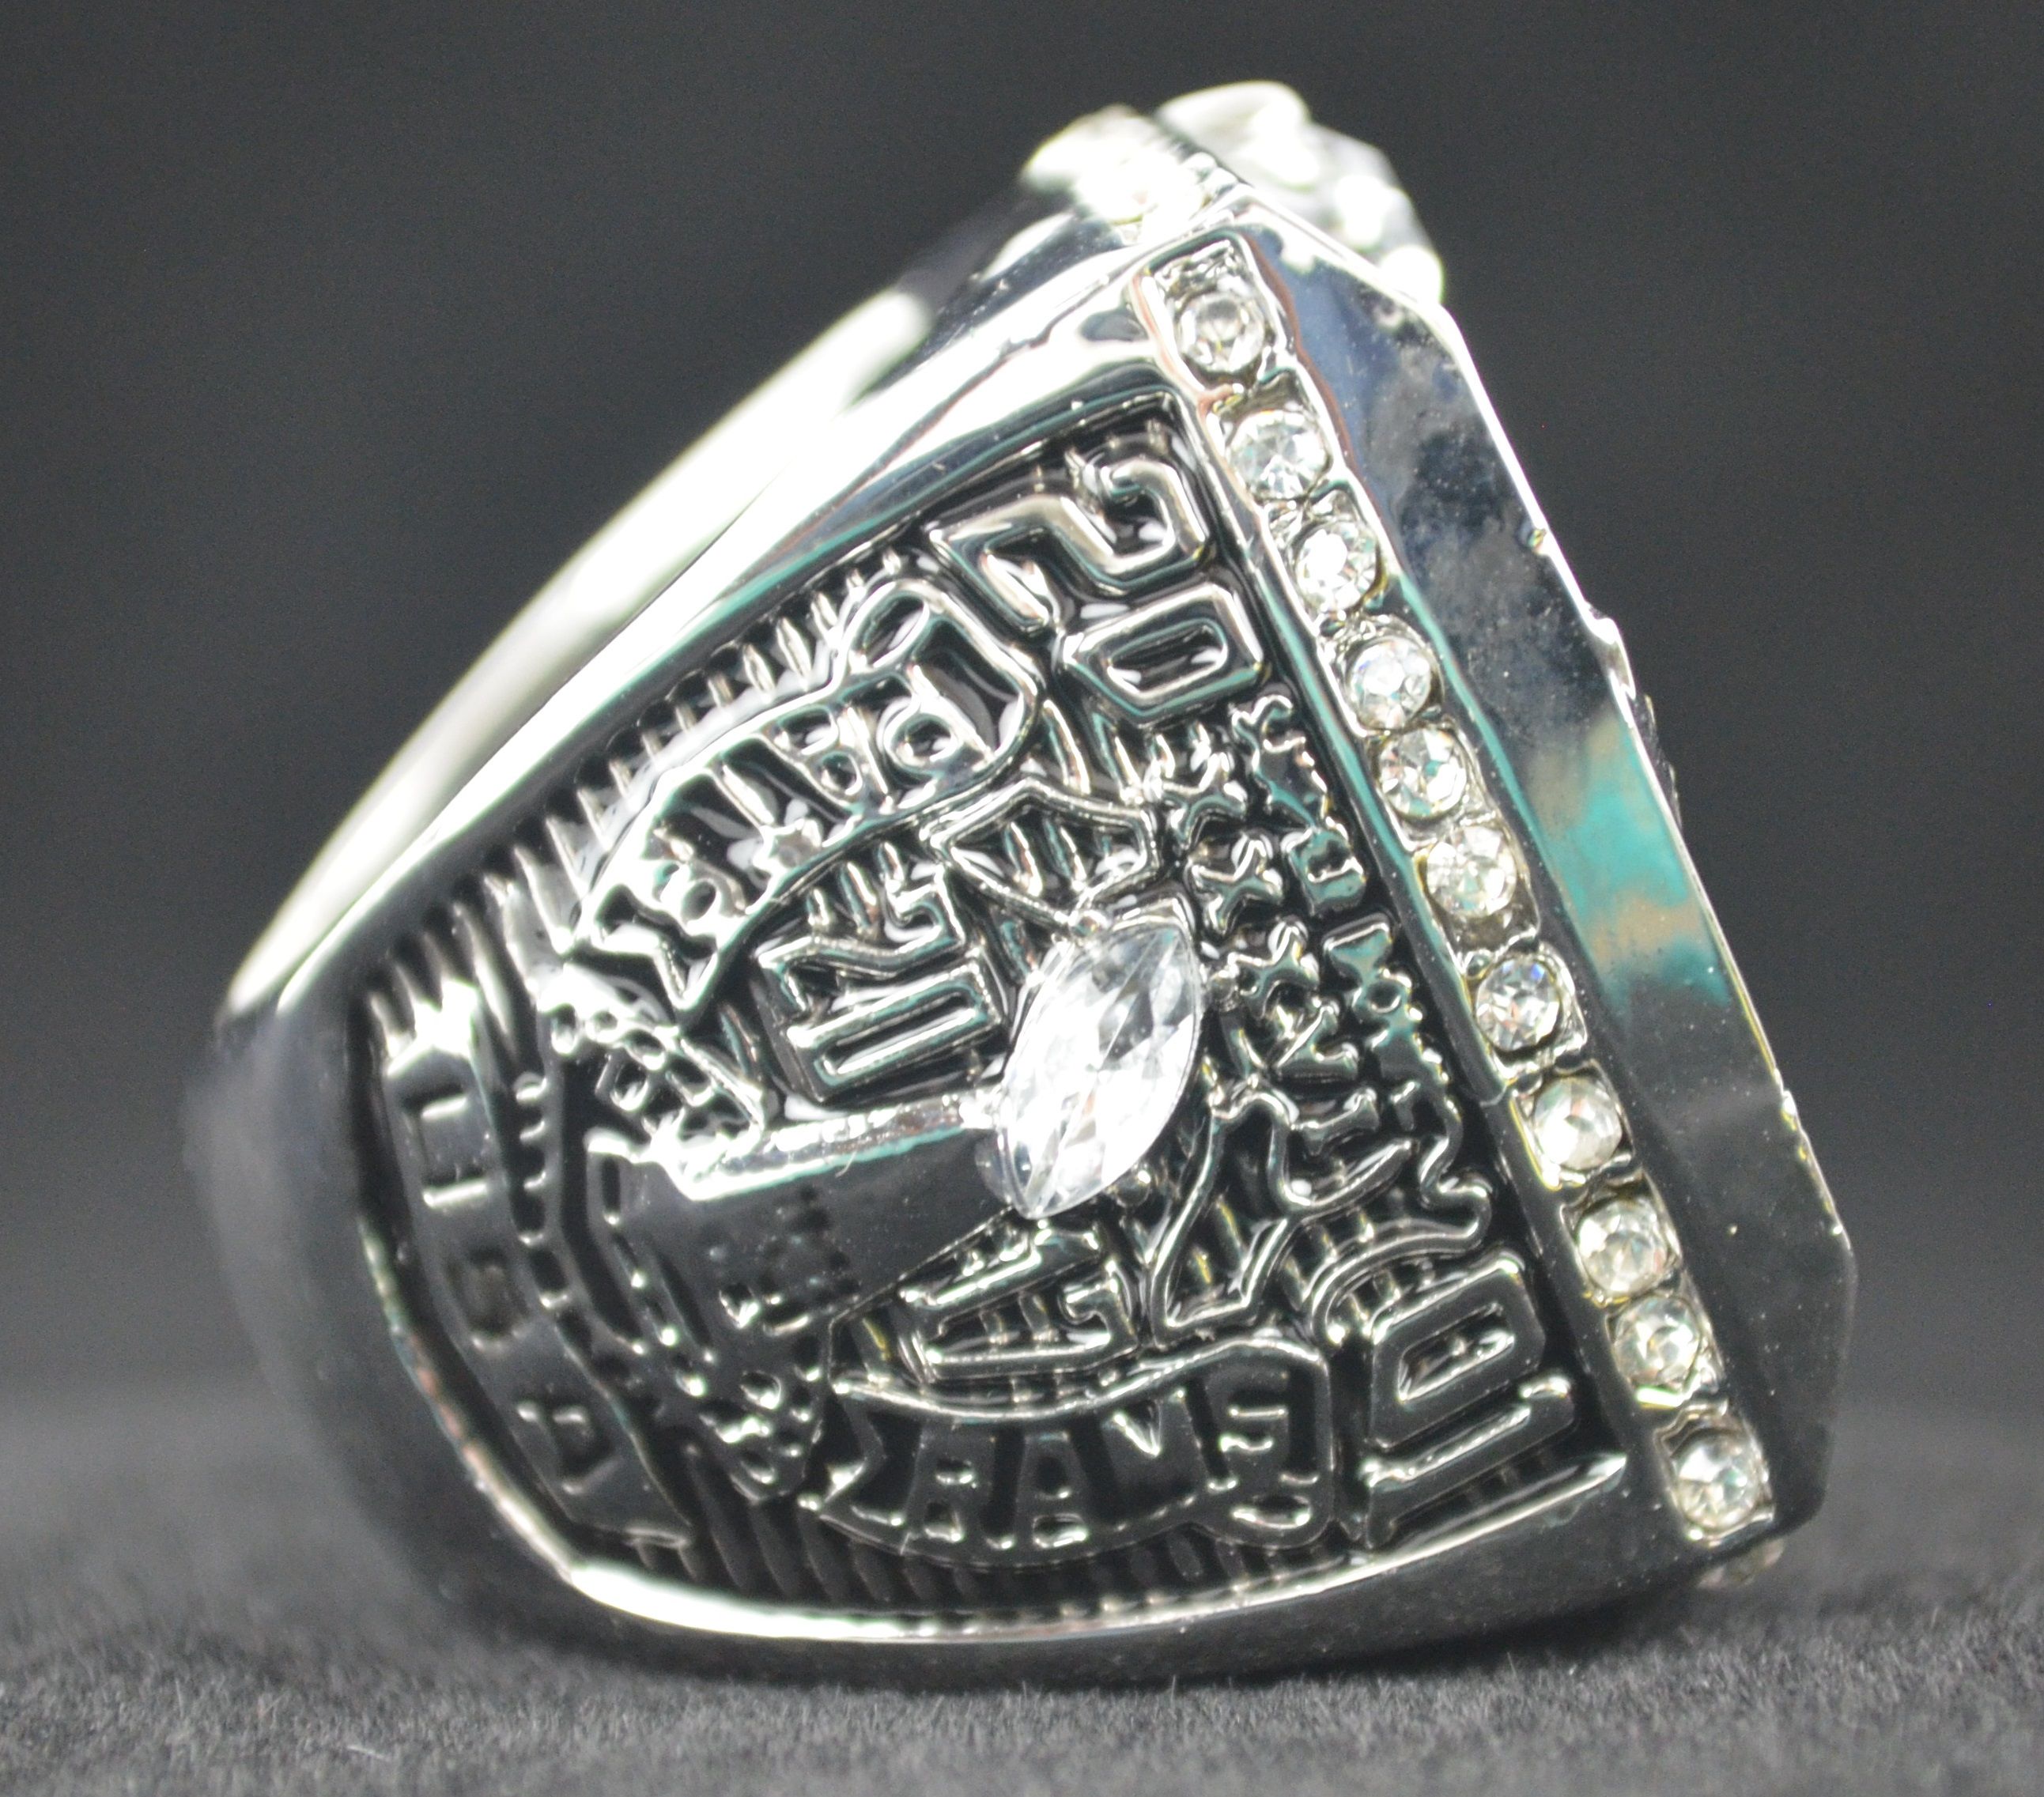 6 New England Patriots NFL Super Bowl championship rings set - MVP Ring